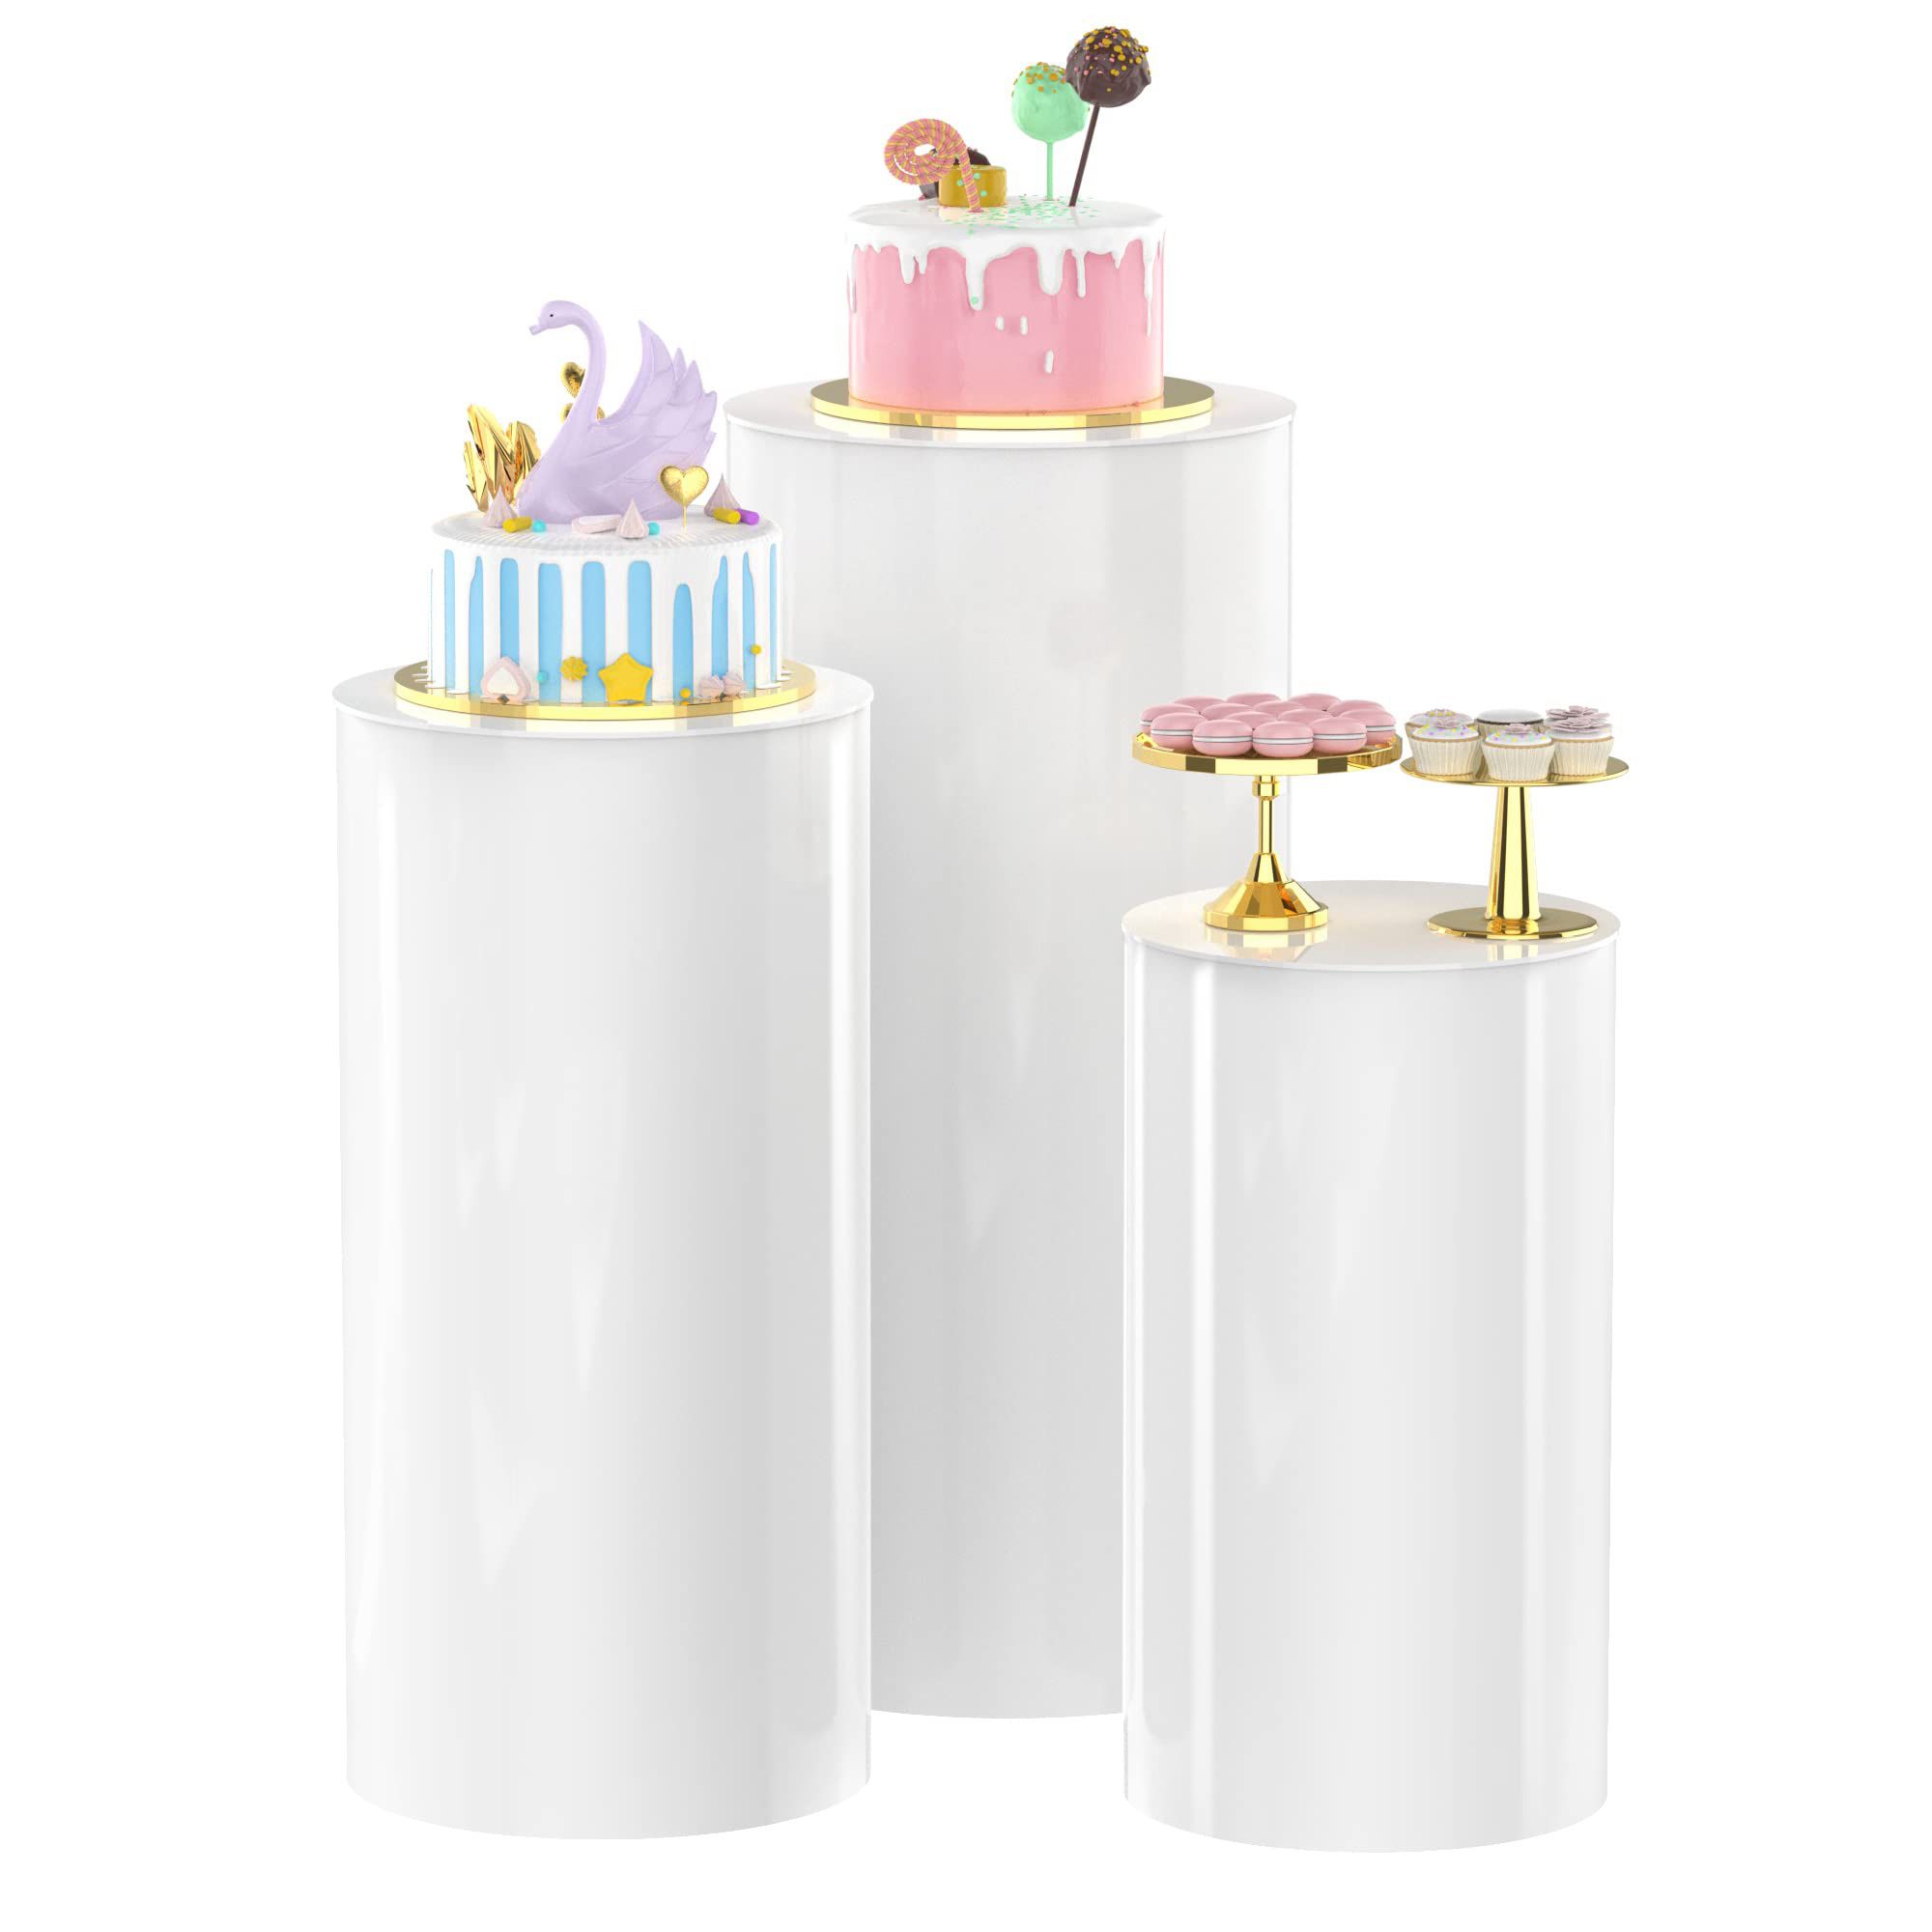 Cylinder Pedestal Stands 3Pcs White Round Cylinder Pedestal Display Plinth Pillars For Wedding Party Decor 35.4''(L),29.5''(M),23.6''(S) Cylinder-3Pcs